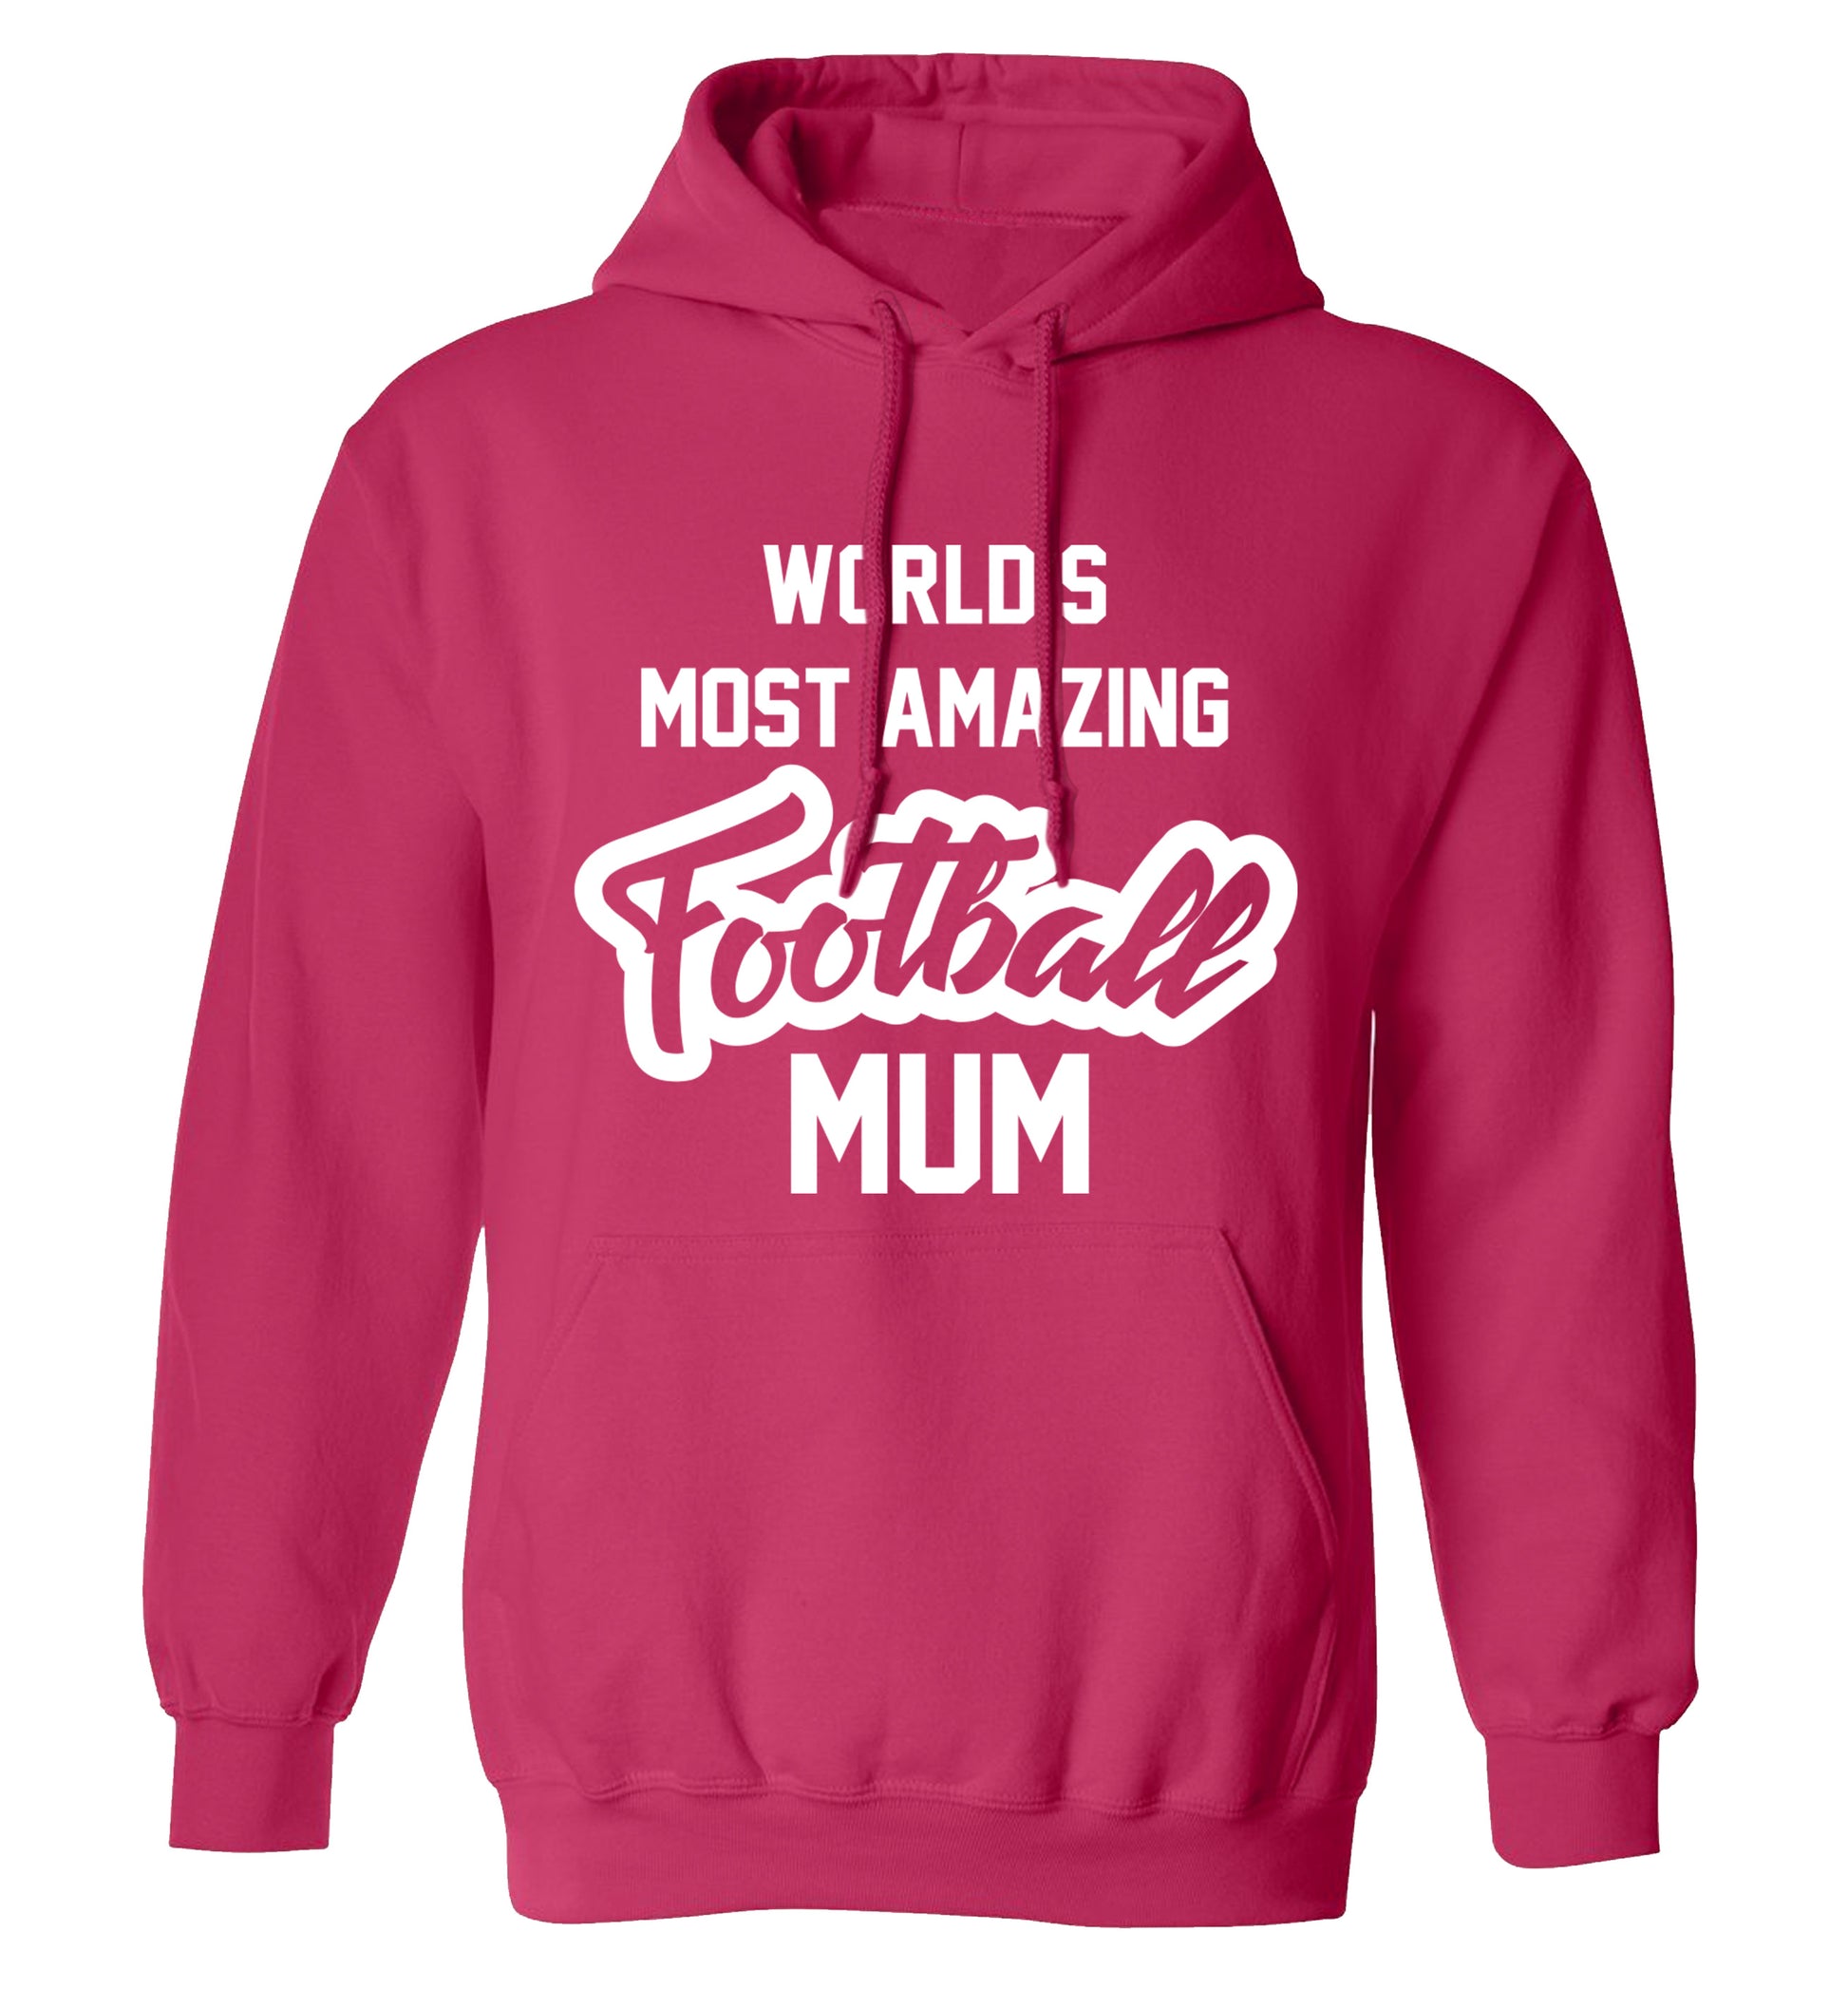 Worlds most amazing football mum adults unisexpink hoodie 2XL